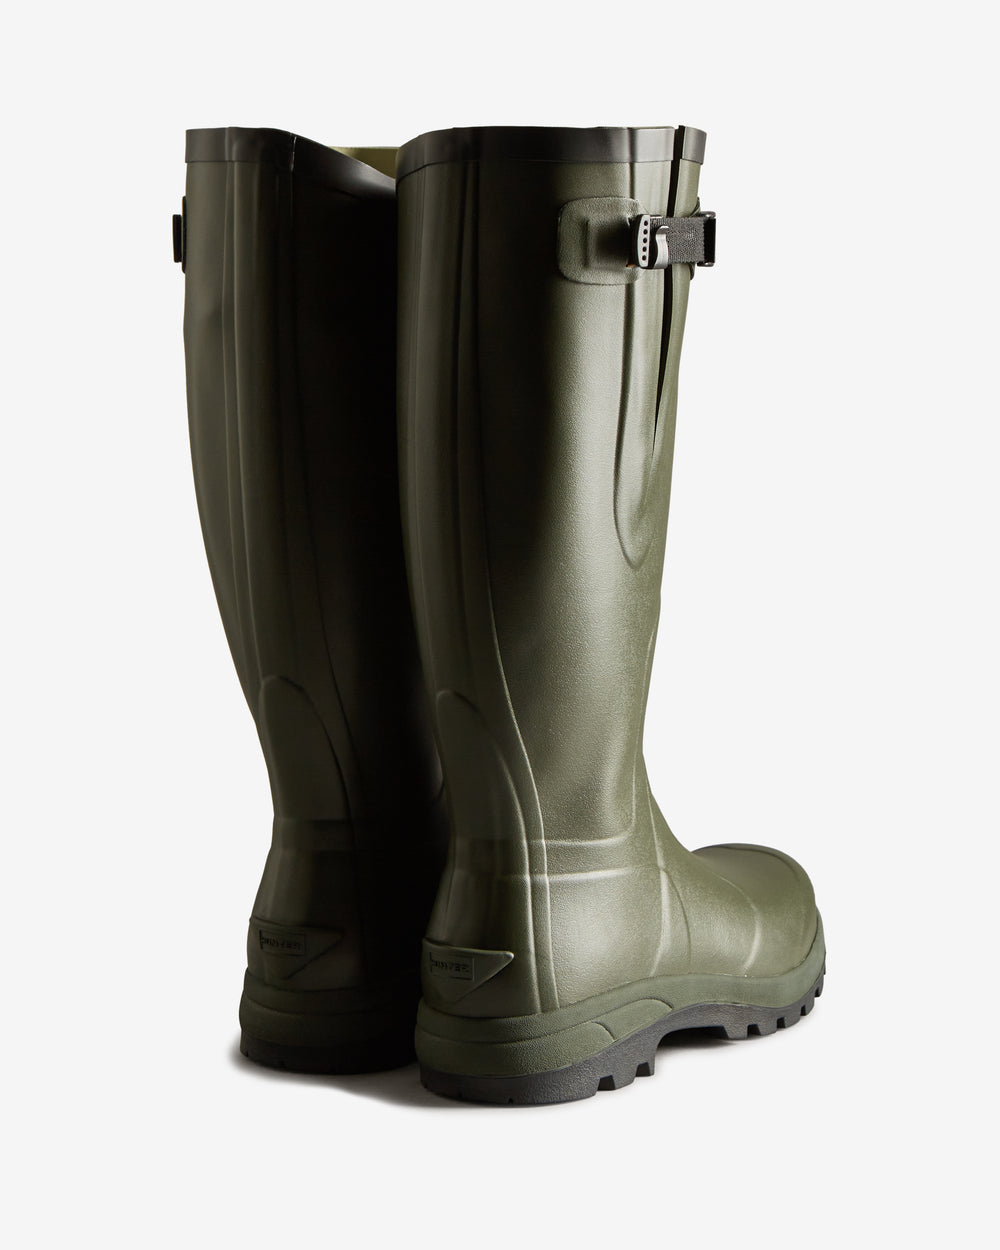 Unisex Balmoral Classic Side Adjustable Wellington Boots